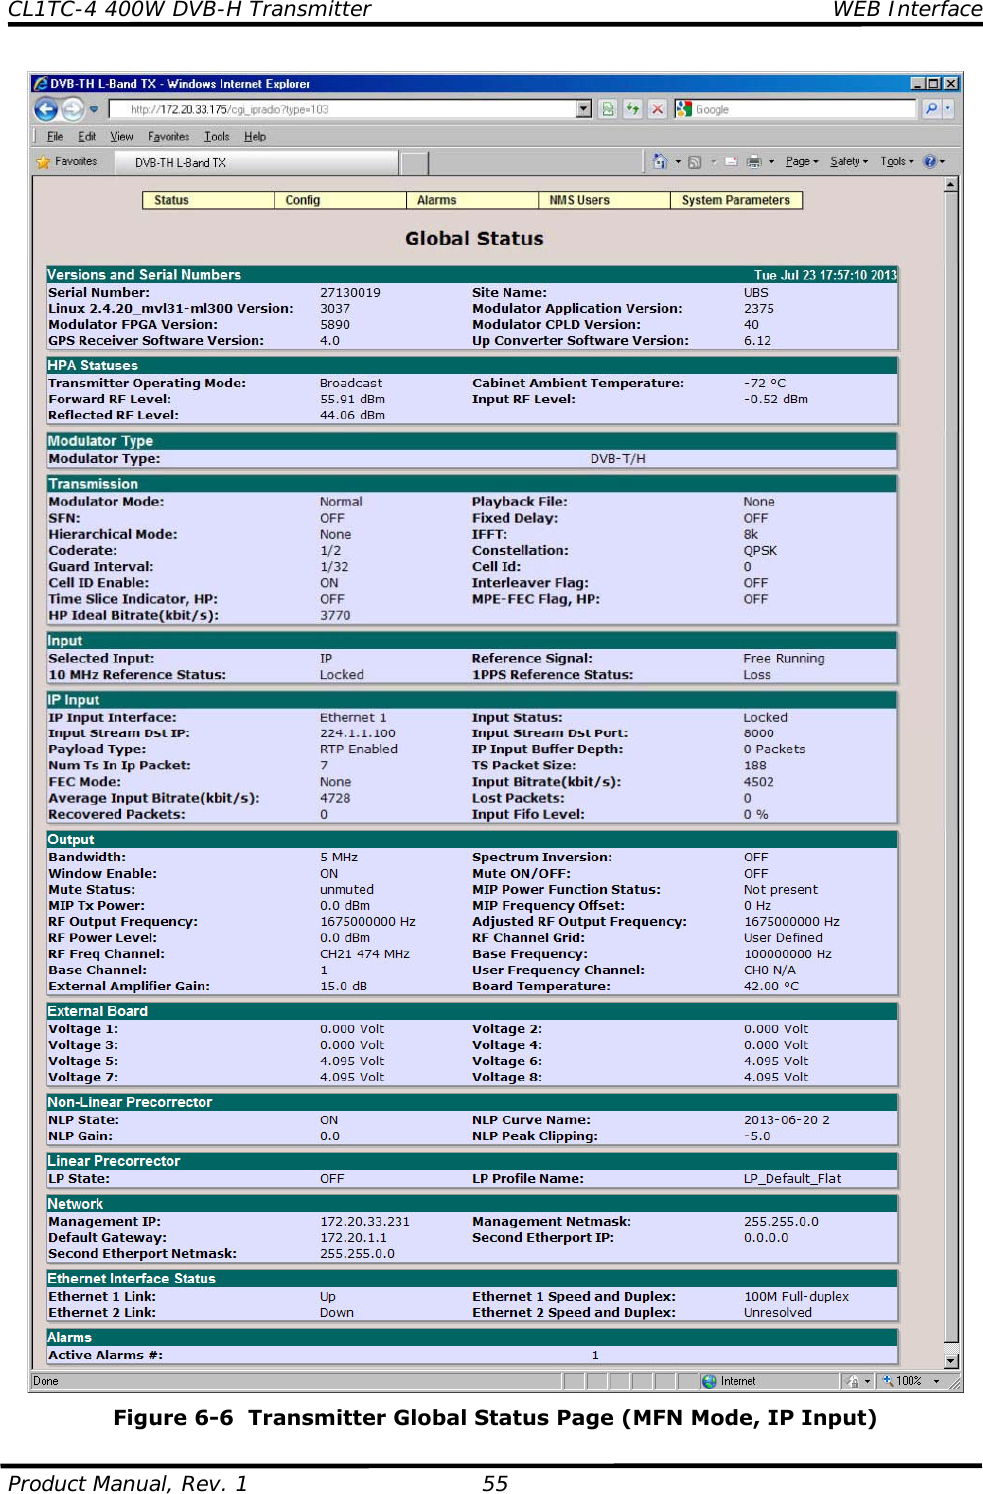 CL1TC-4 400W DVB-H Transmitter   WEB Interface  Product Manual, Rev. 1  55  Figure 6-6  Transmitter Global Status Page (MFN Mode, IP Input) 